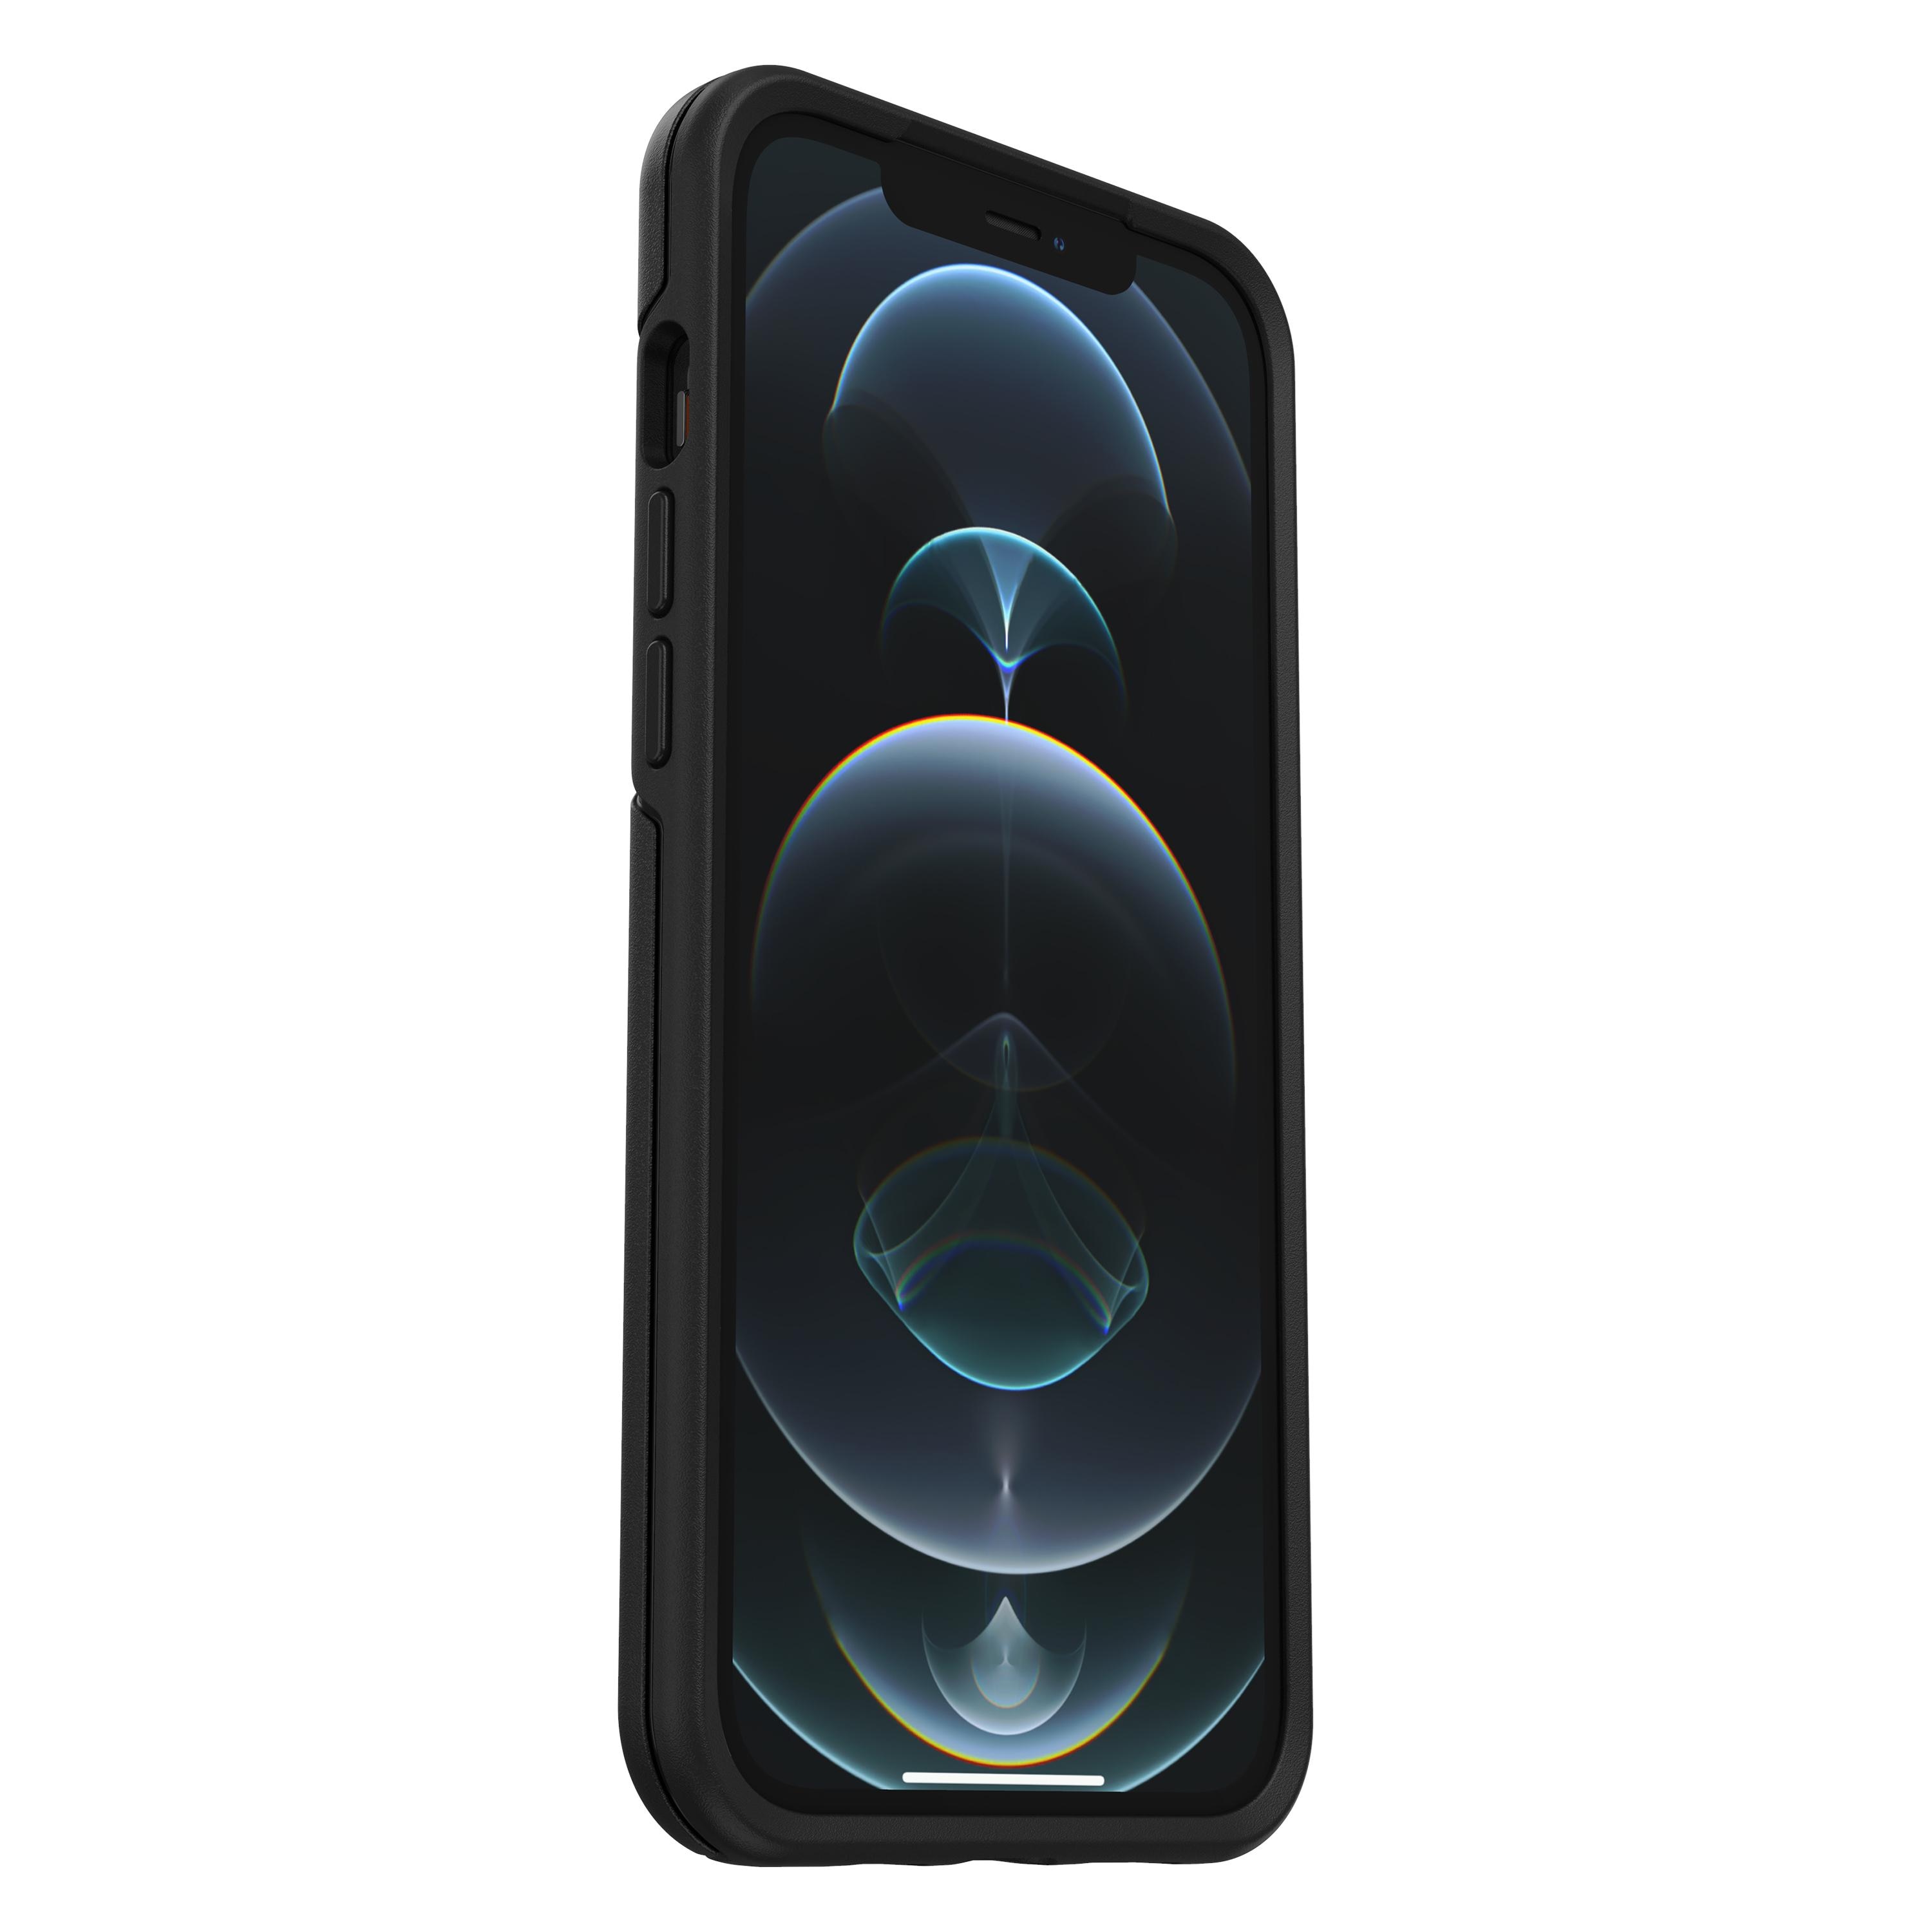 Symmetry Case iPhone 12 Pro Max Black